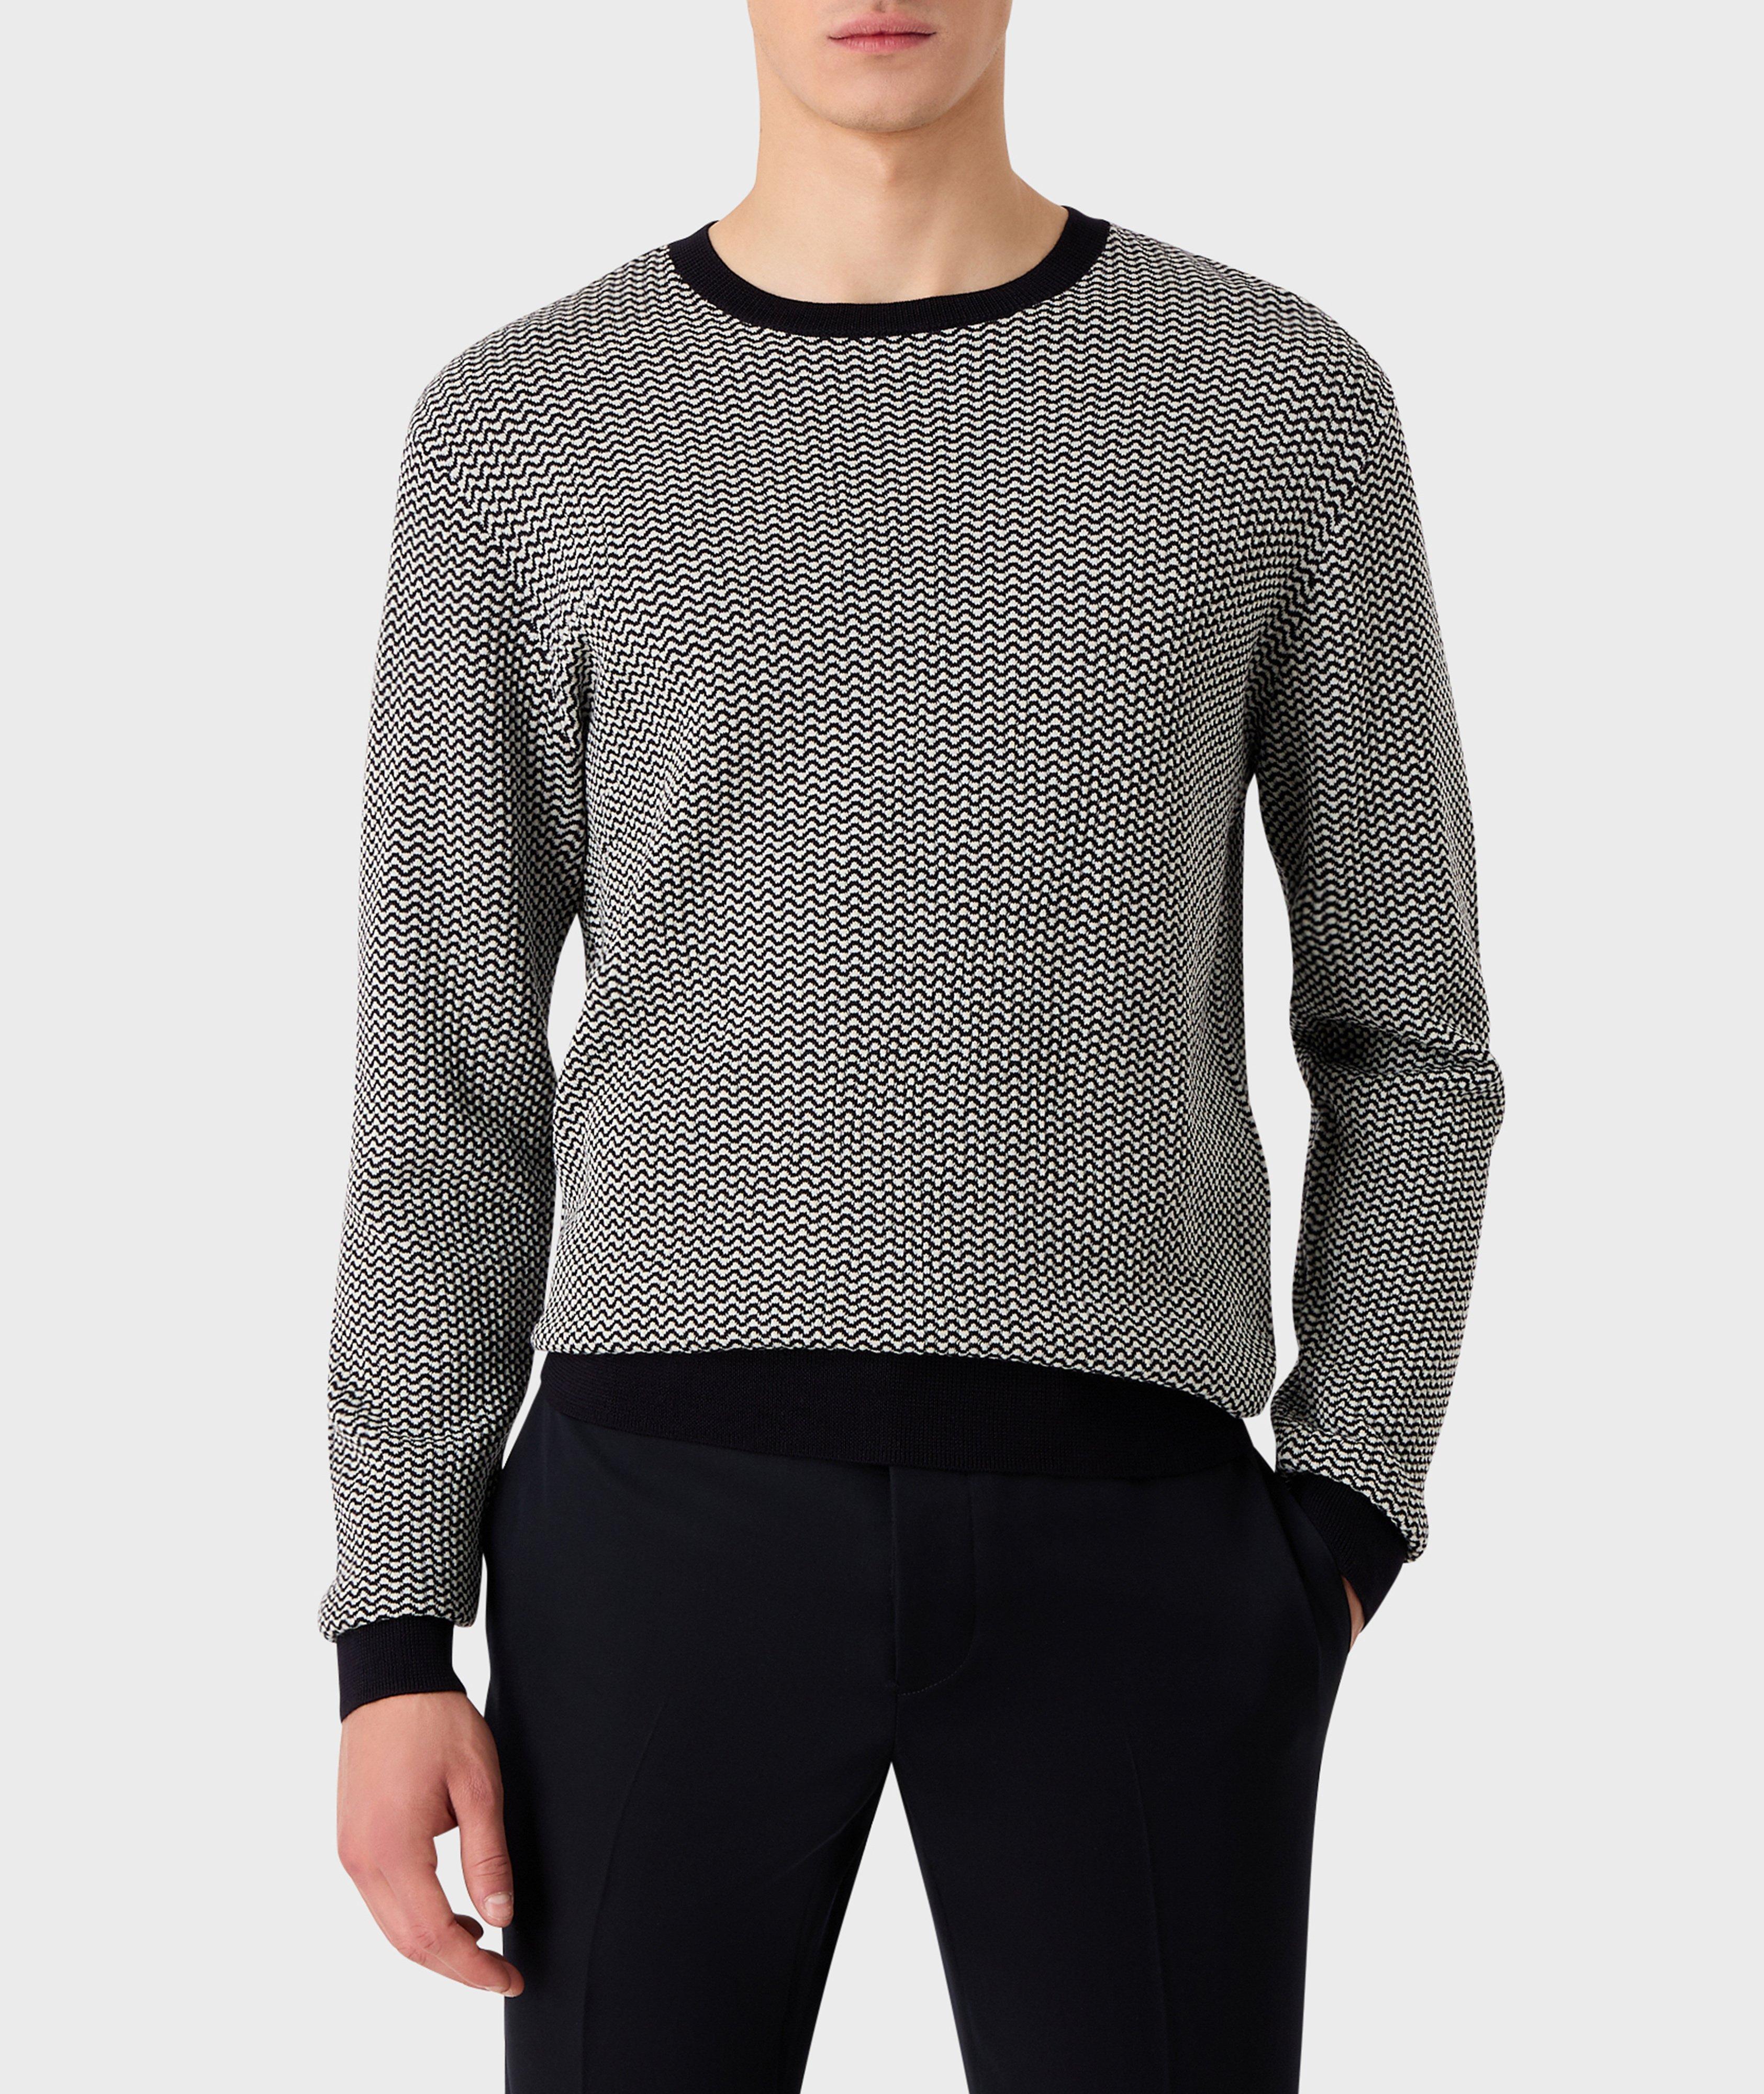 Merino wool jacquard sweater Black Kenzo